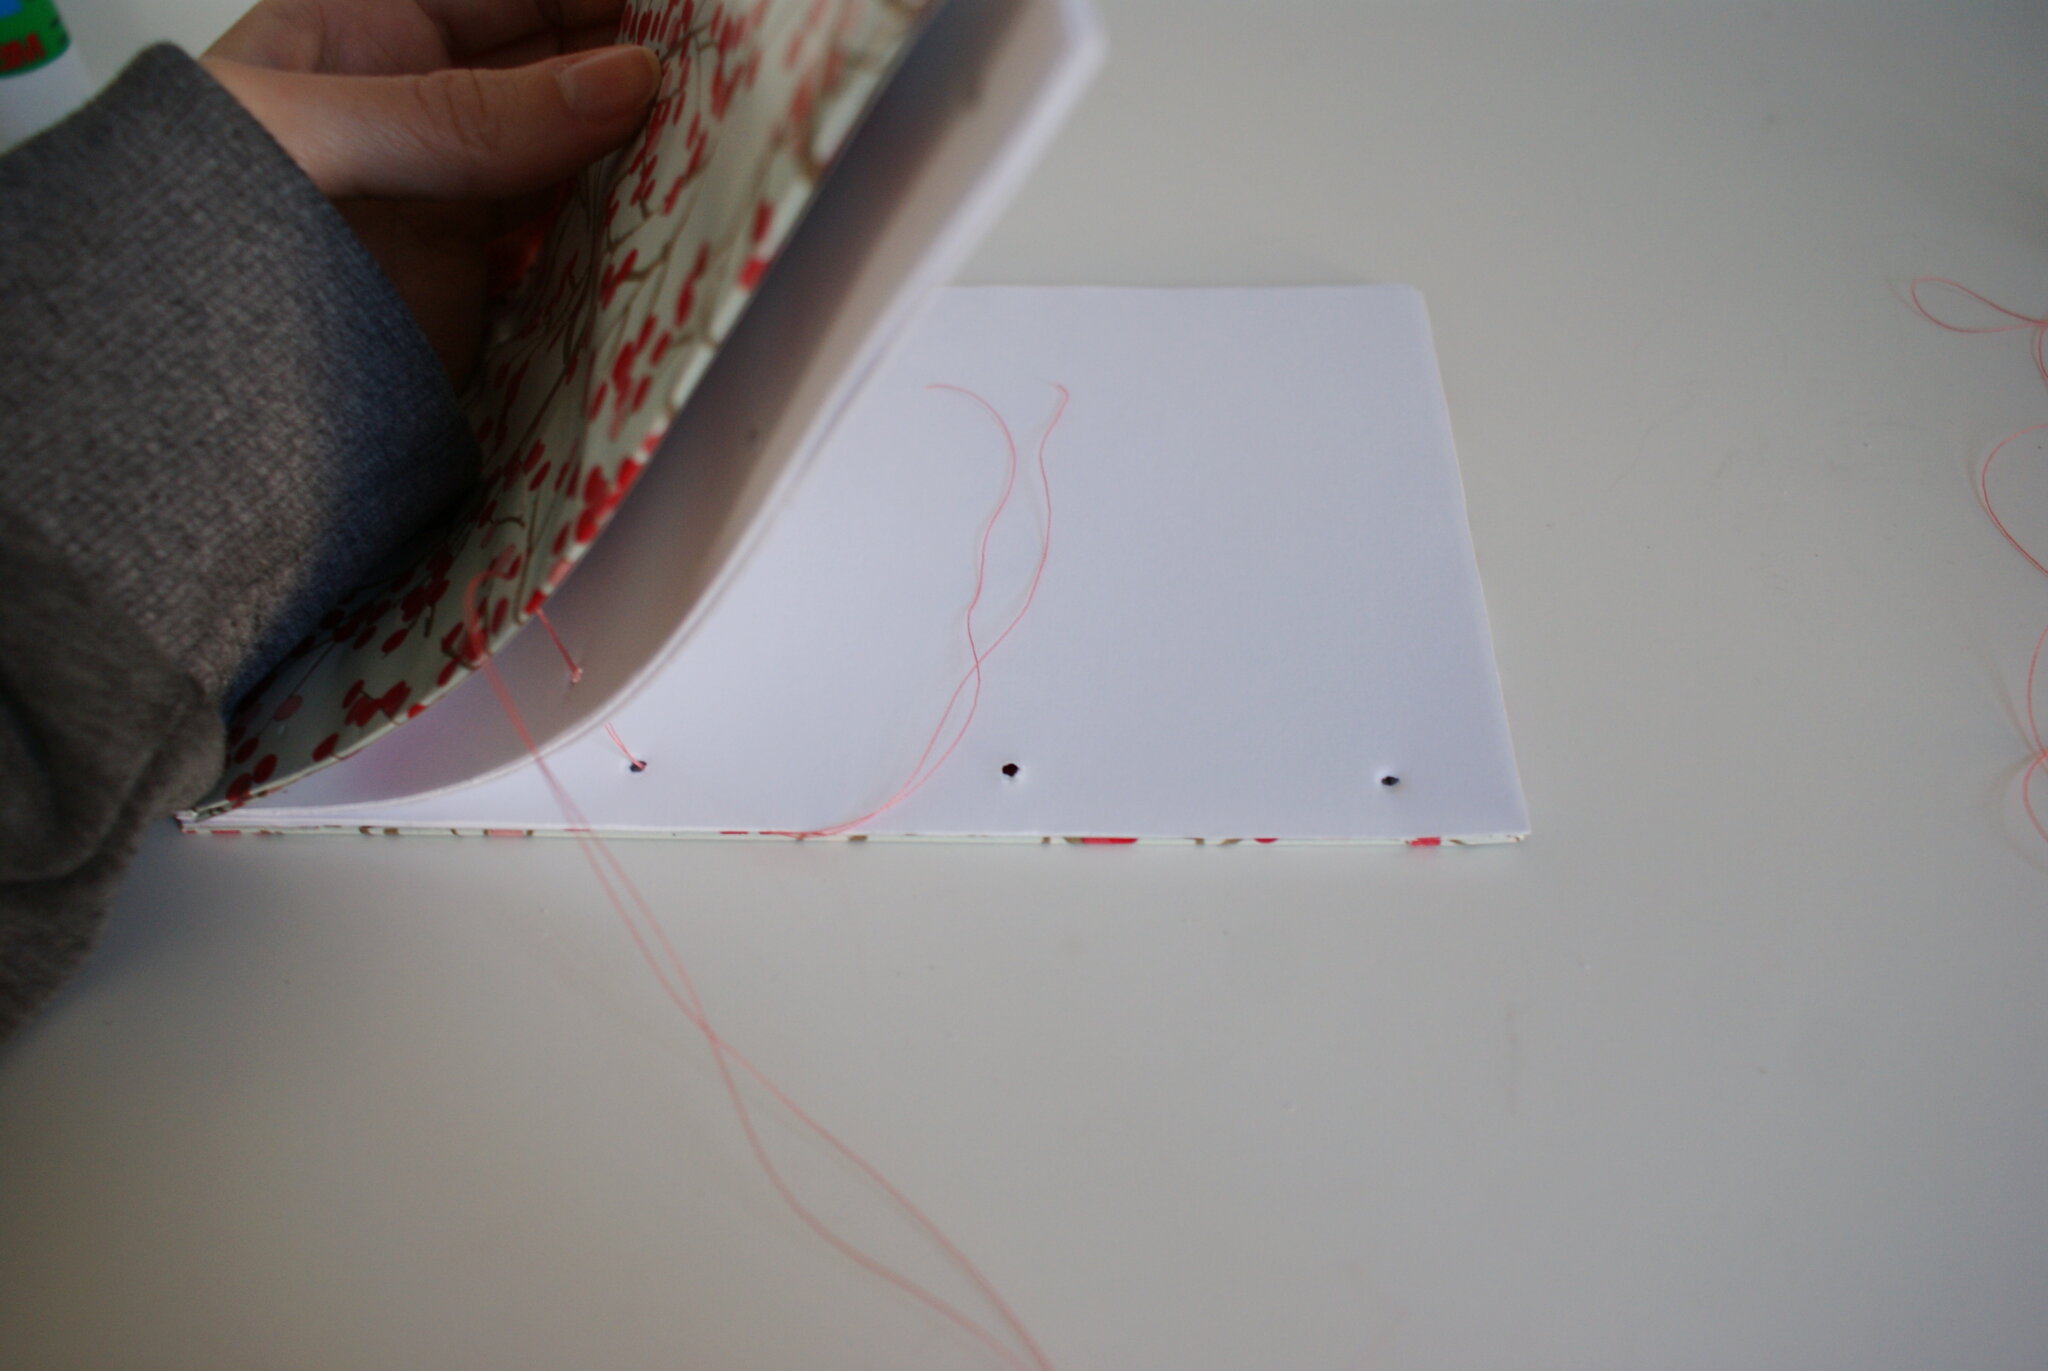 diy watoji japanese handmade binding technique journal paper craft tutorial francinesplaceblog